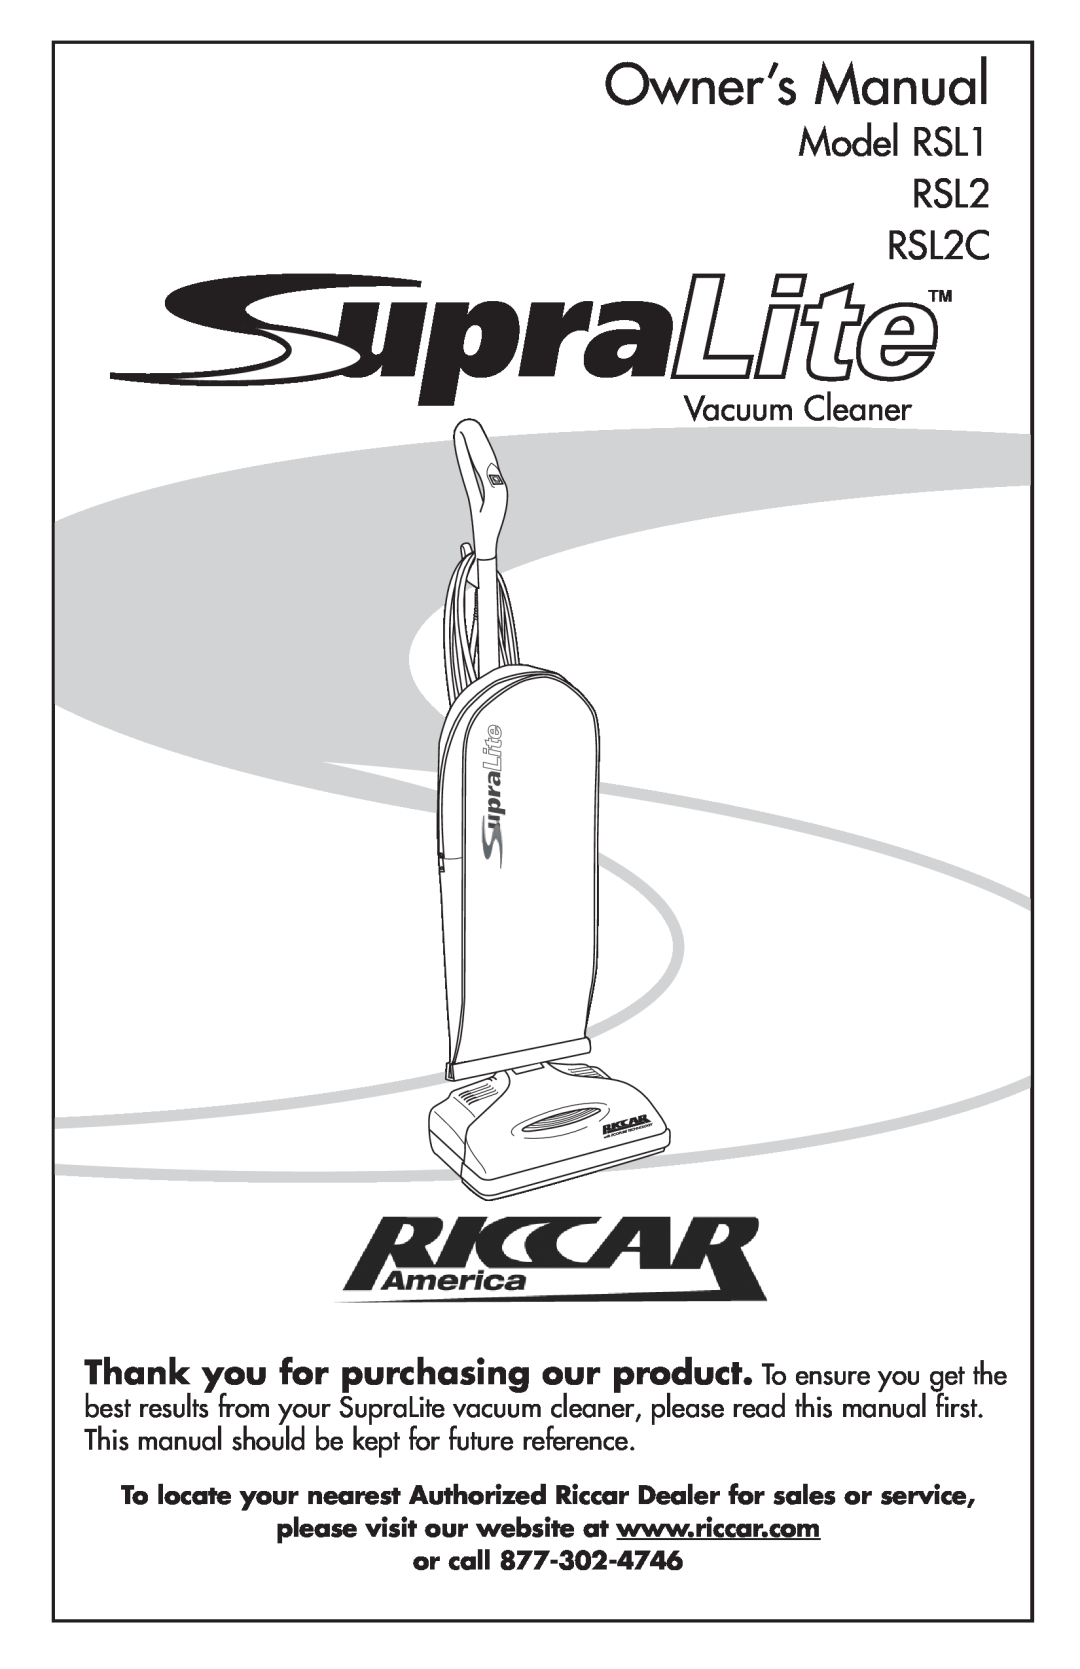 Riccar owner manual Model RSL1 RSL2 RSL2C, Vacuum Cleaner, or call 